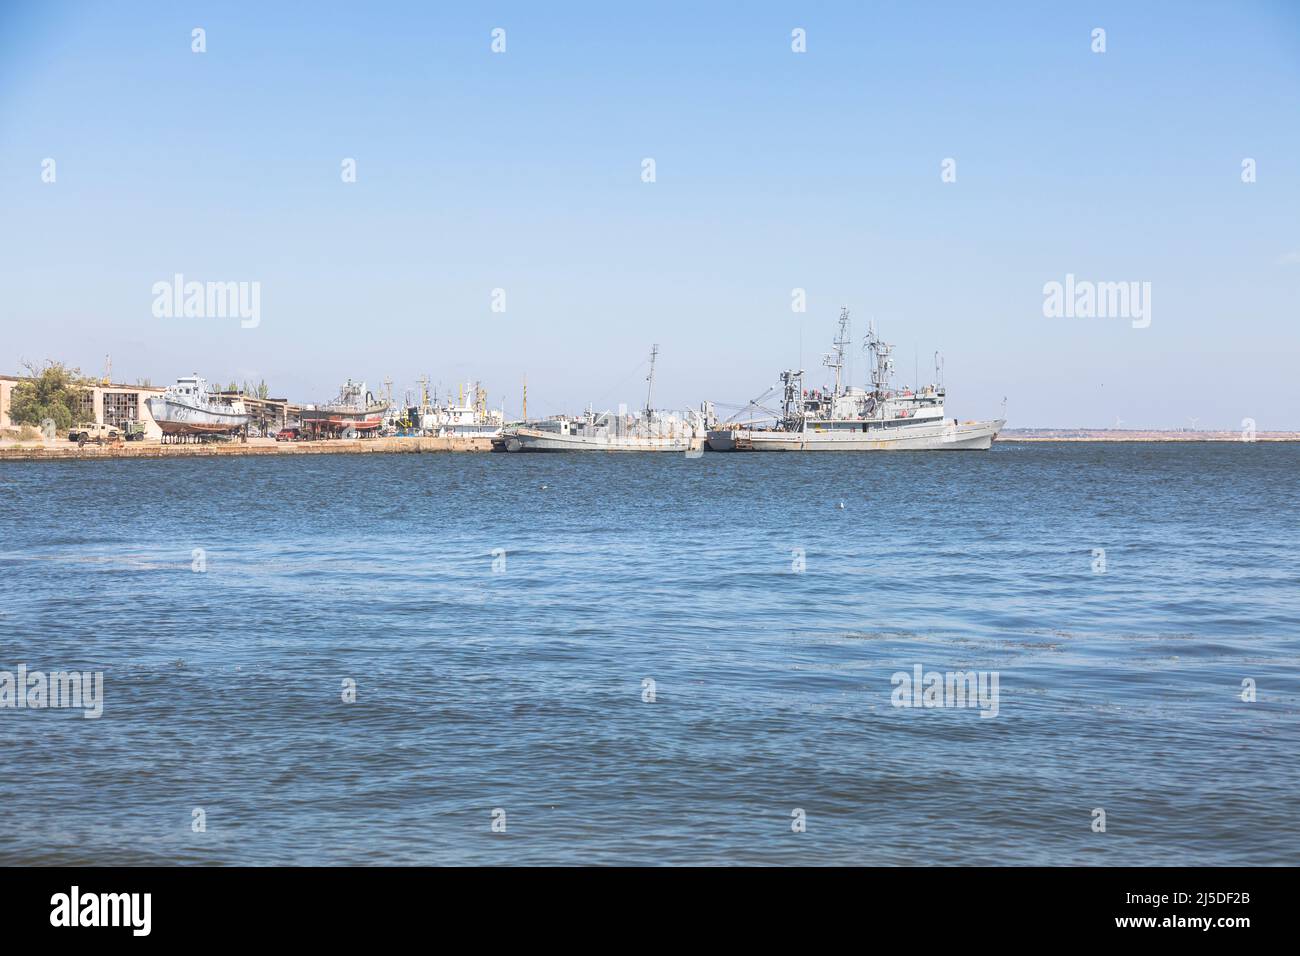 OCHAKIV, MYKOLAIV REGION, UKRAINE - Sept 16 2019: Ukrainian warships and boats near the pier in the Black Sea Stock Photo